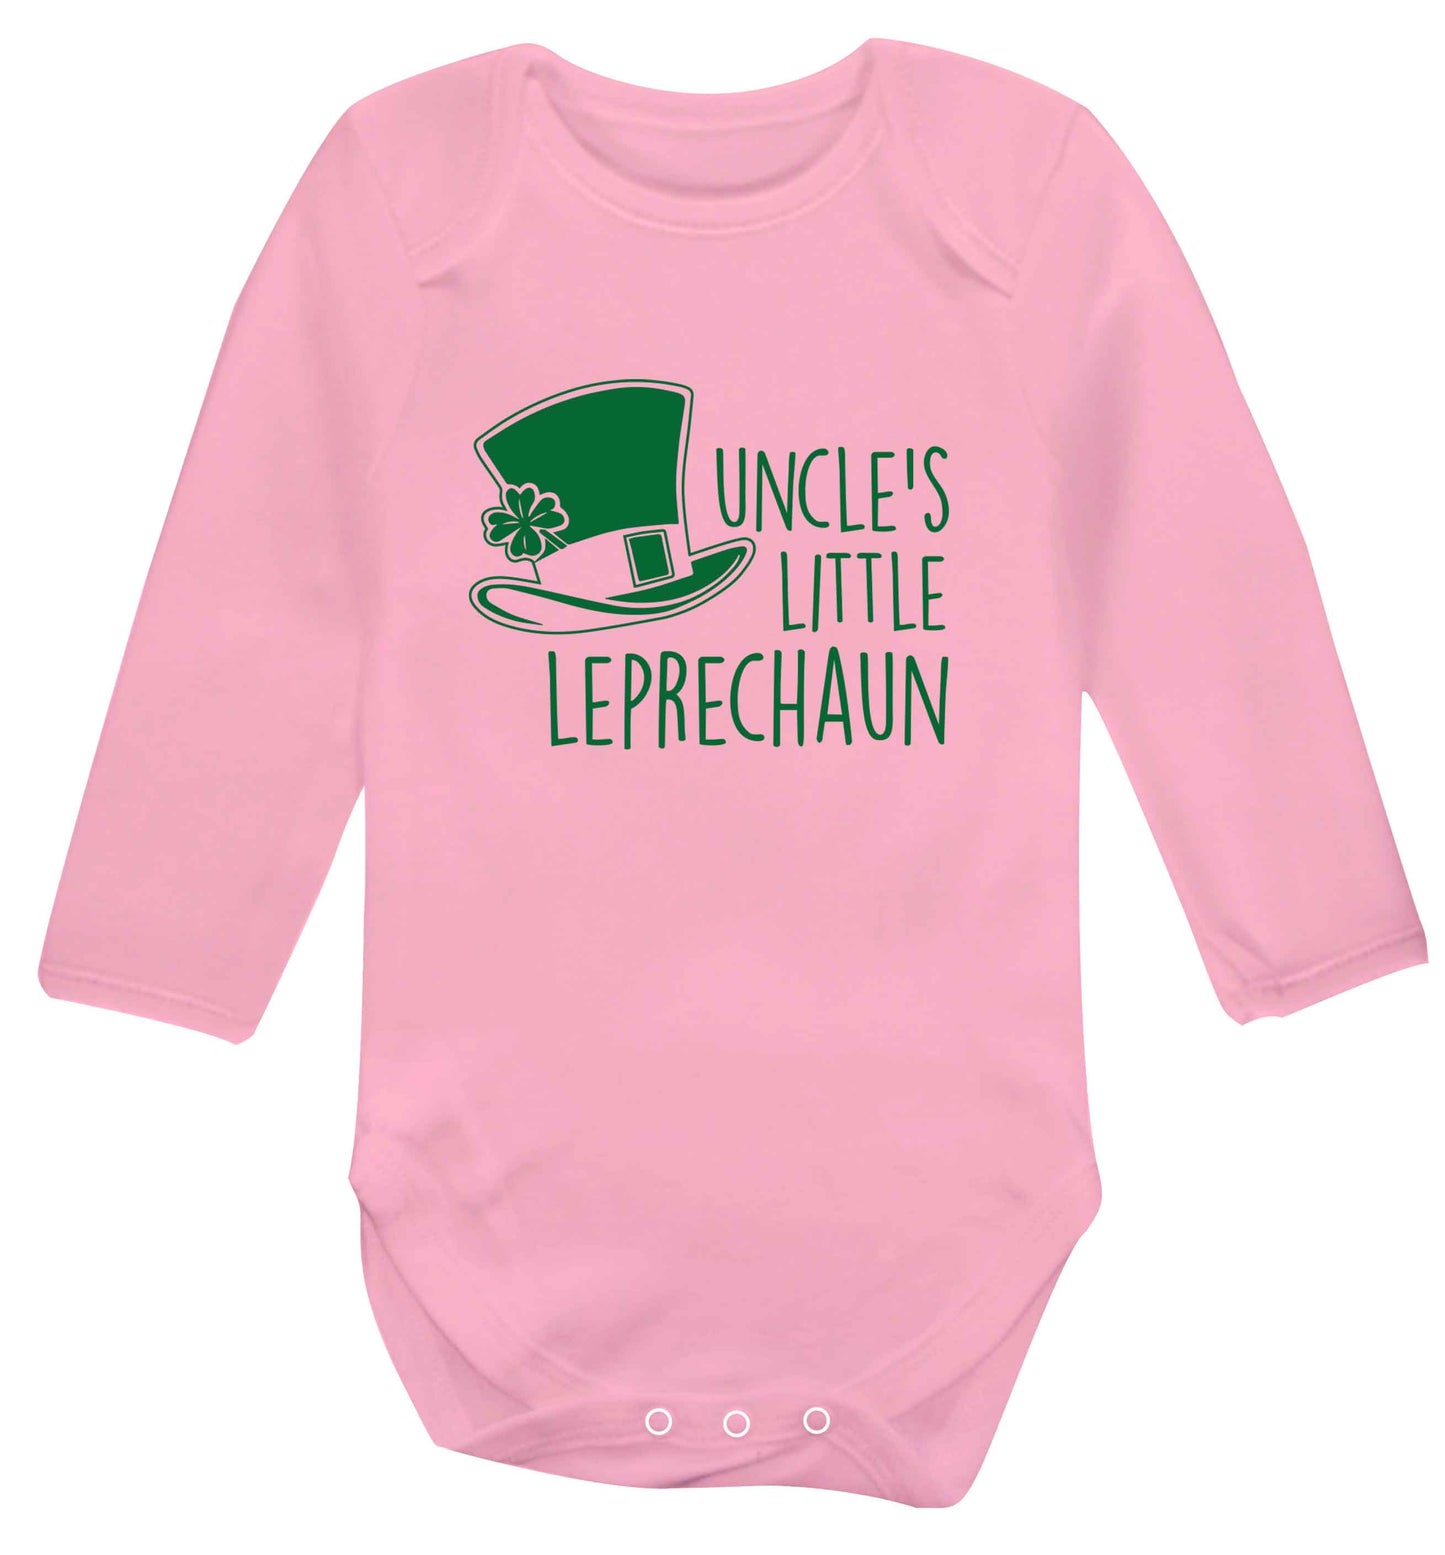 Uncles little leprechaun baby vest long sleeved pale pink 6-12 months